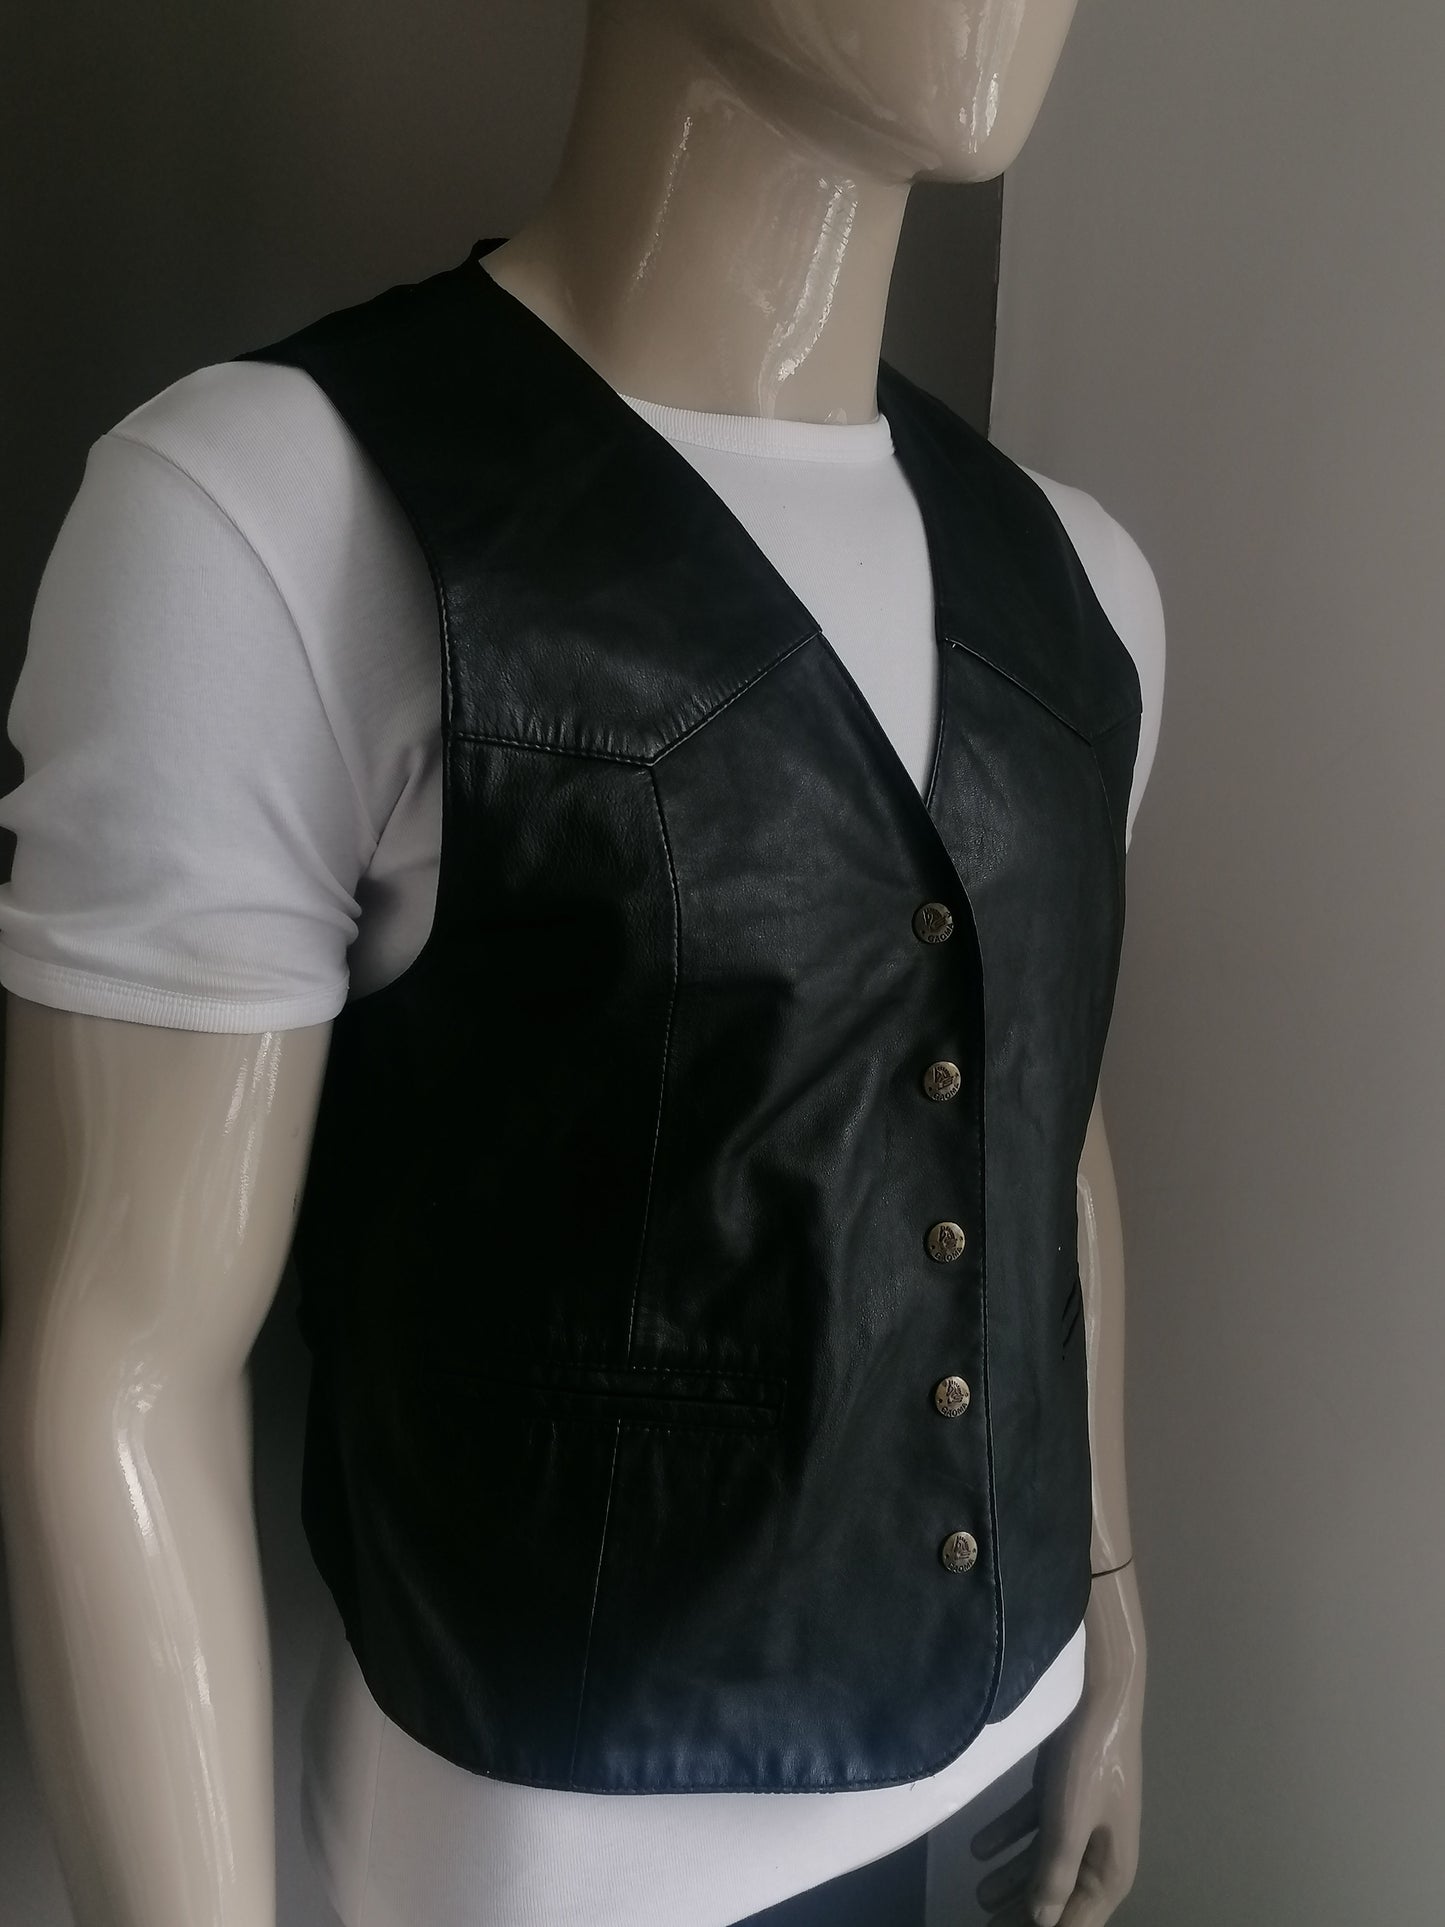 Fashion studio leather waistcoat with press studs. Black colored. Size M.